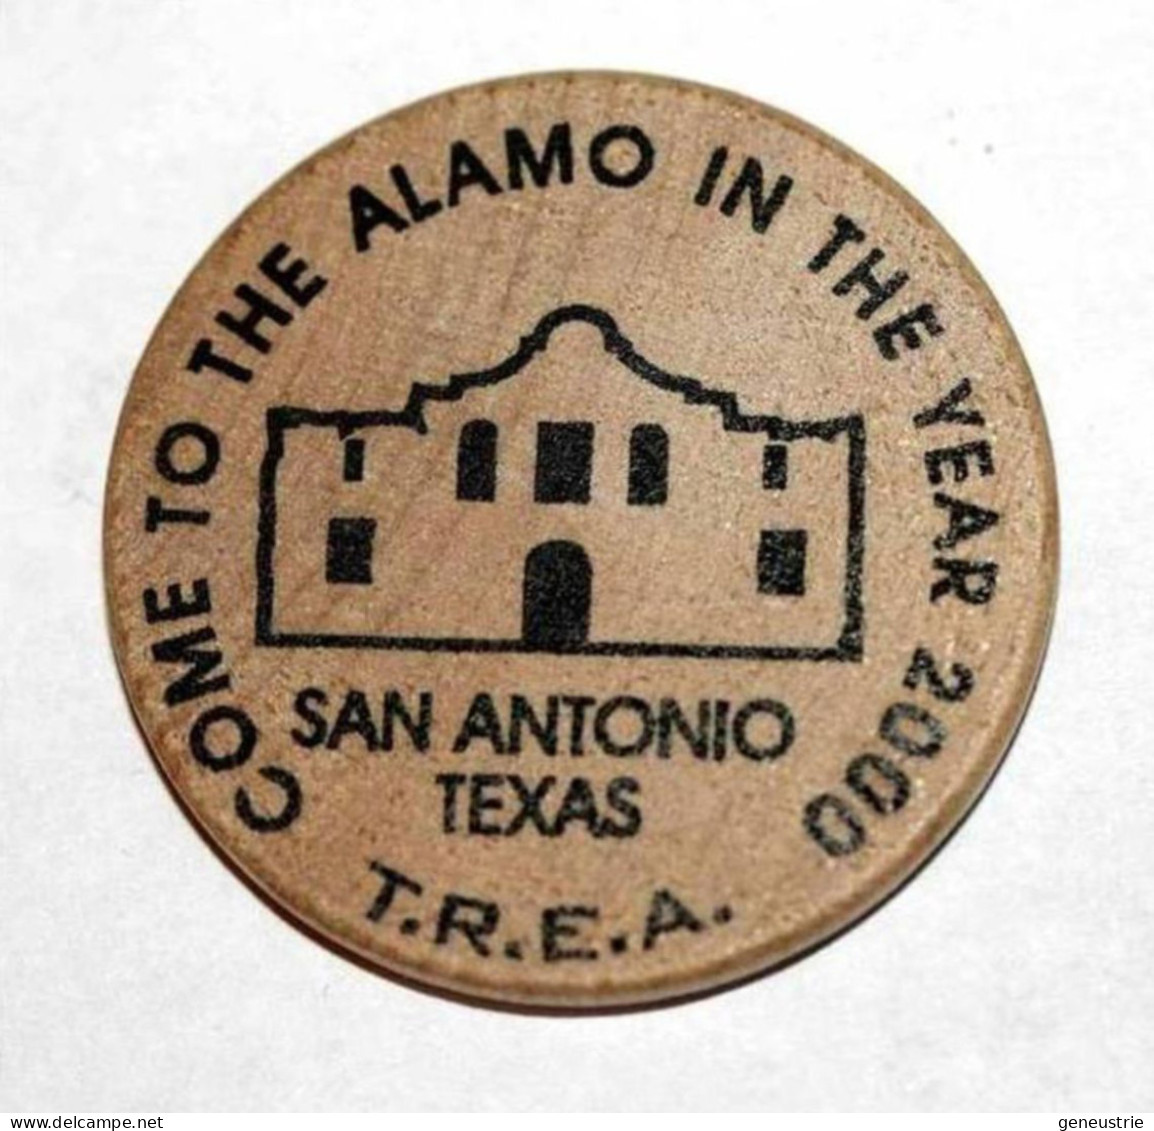 Wooden Token - Wooden Nickel - Jeton Bois Monnaie Nécessité - Texas San Antonio - Fort Alamo 2000 - Etats-Unis - Monetari/ Di Necessità